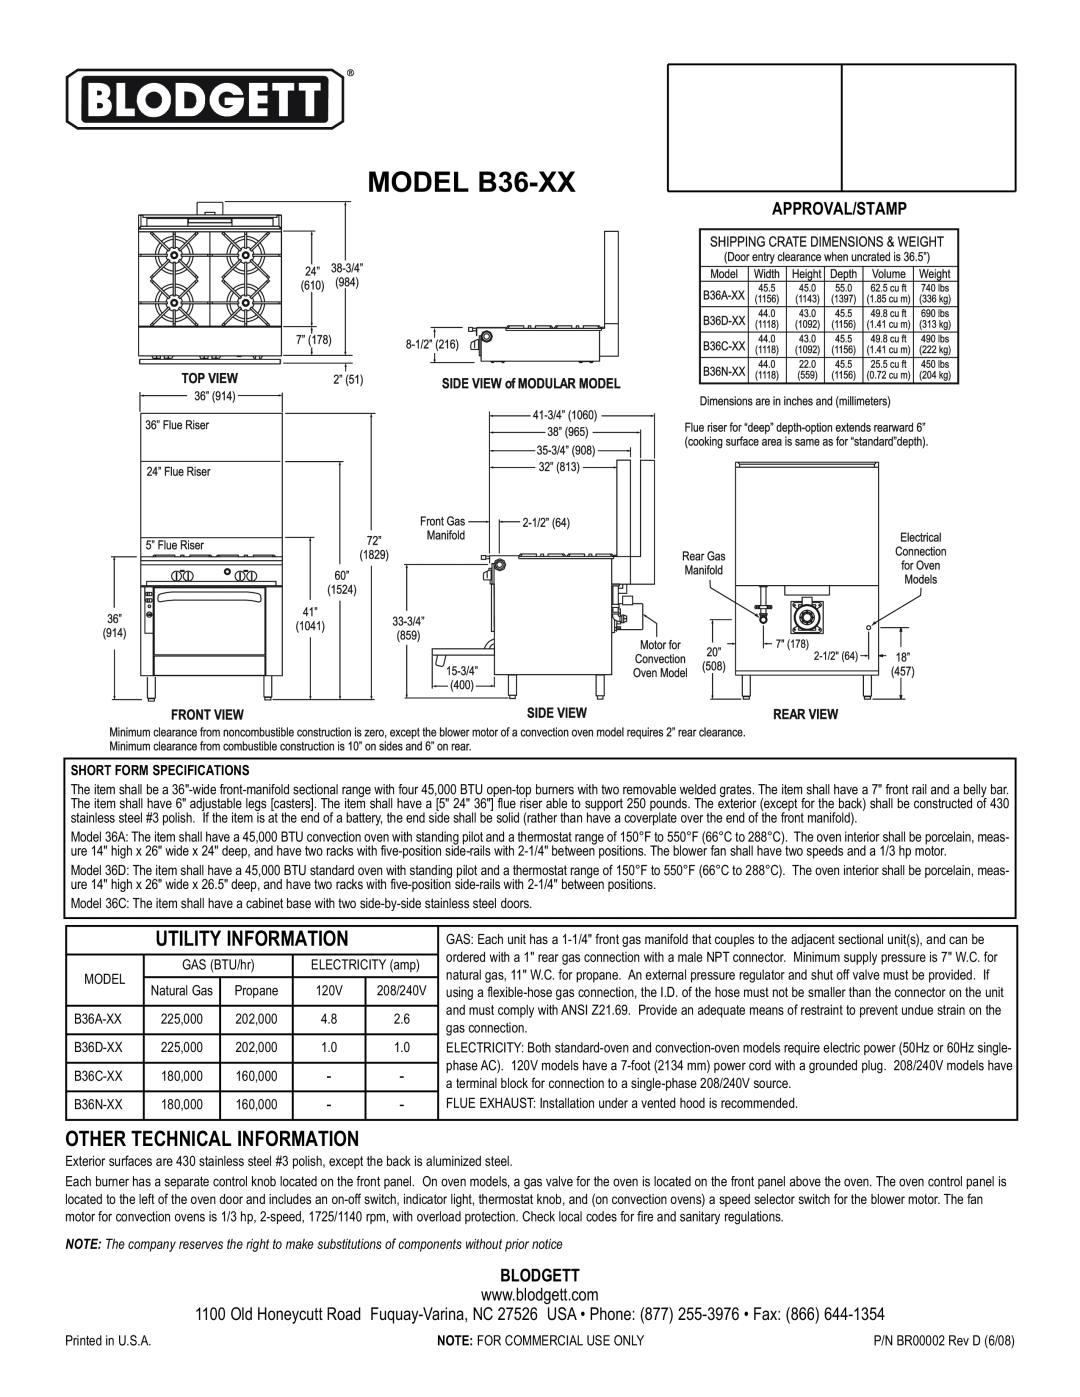 Blodgett warranty MODEL B36-XX, Utility Information, Other Technical Information, Approval/Stamp, Blodgett 